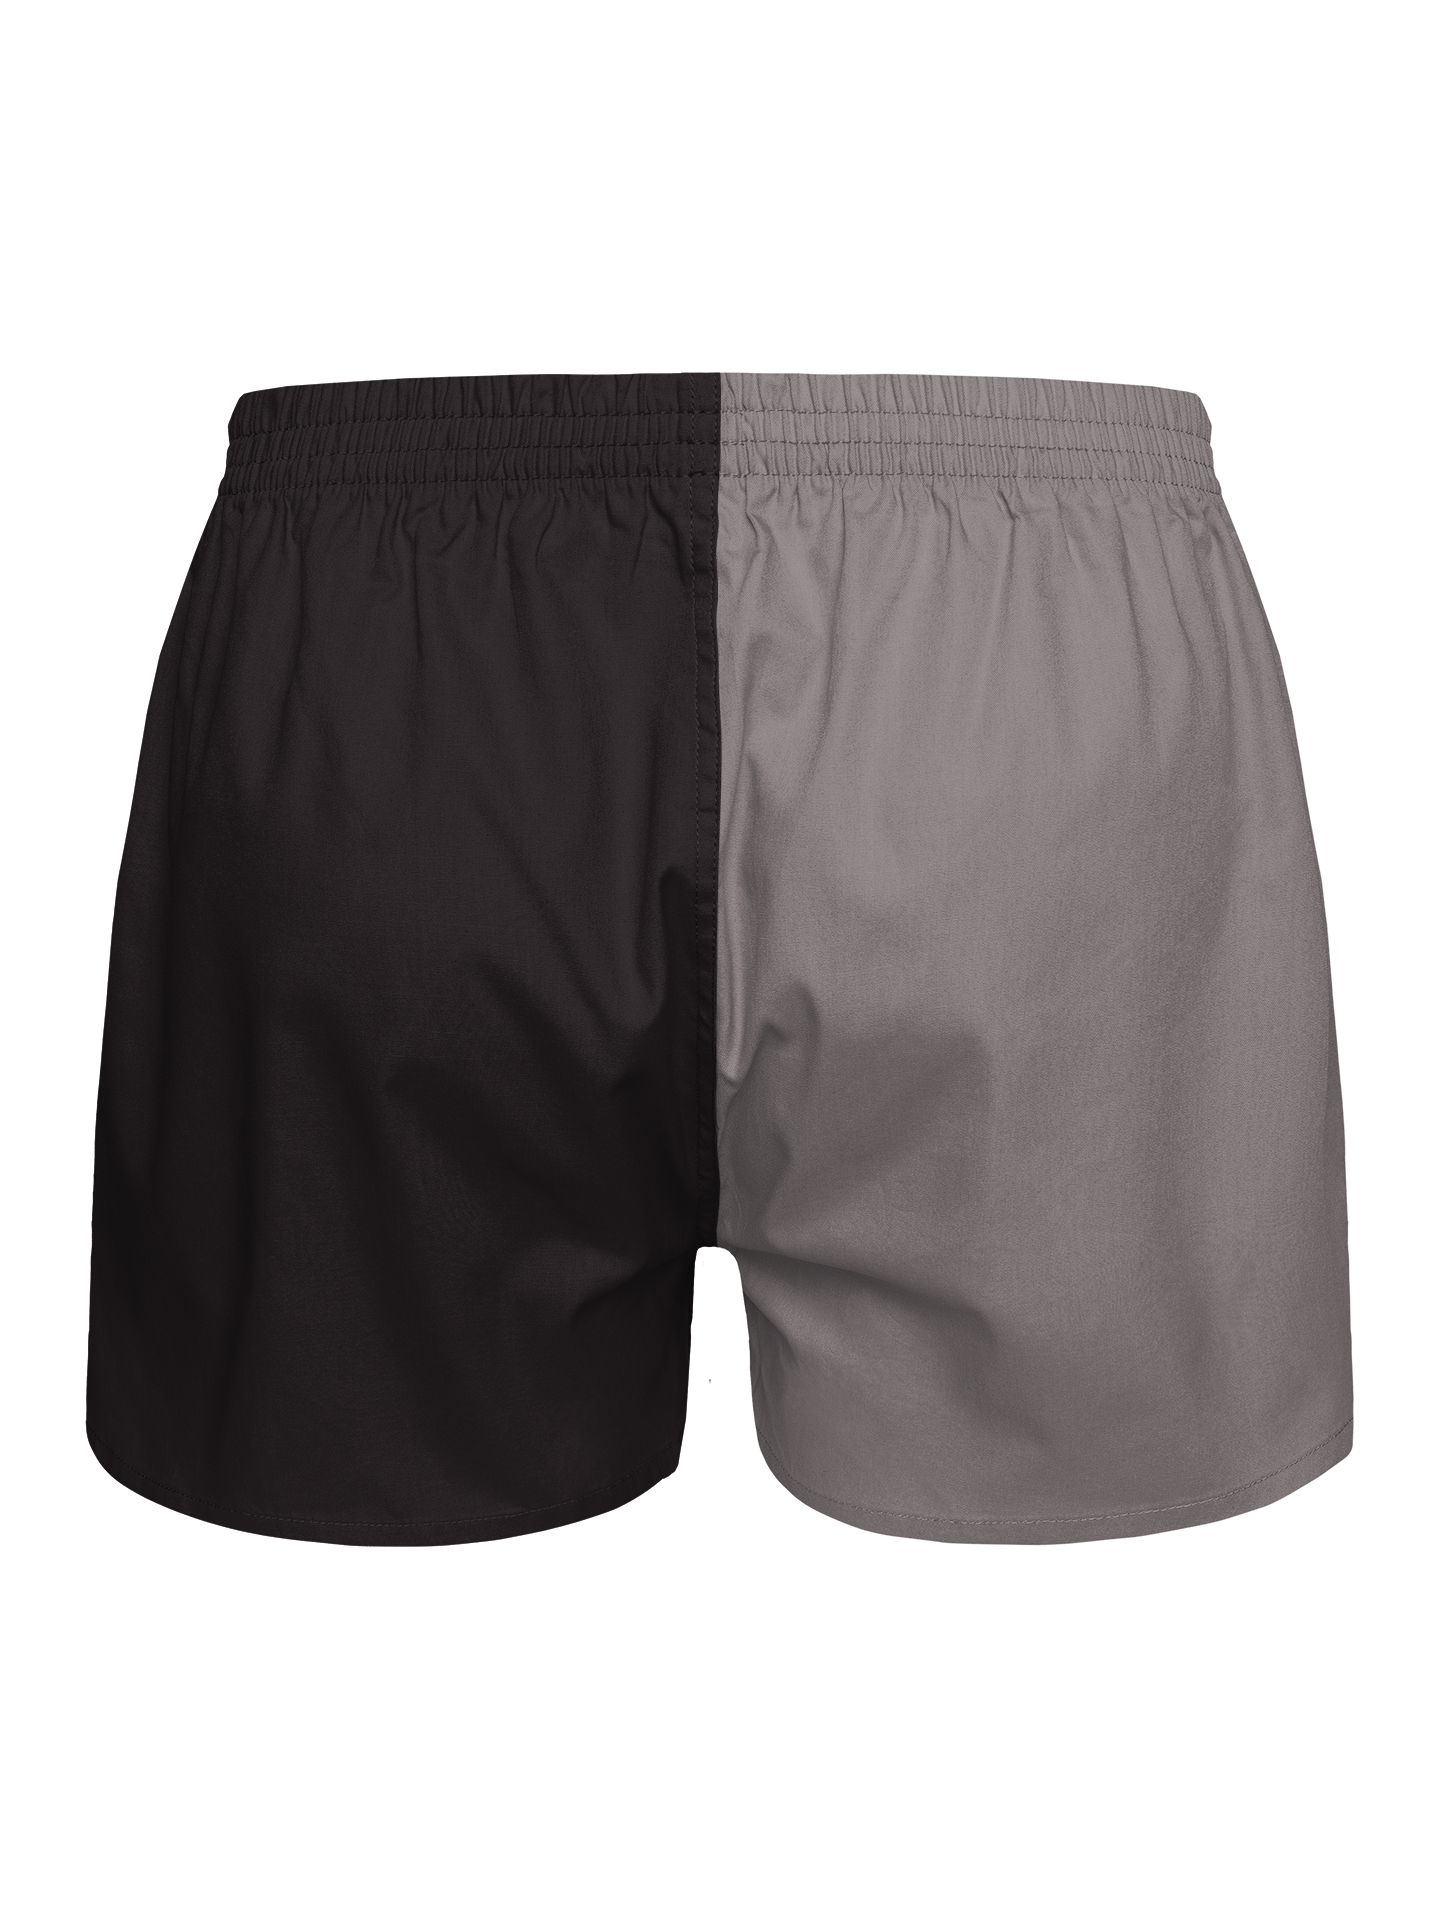 Grey & Black Men's Boxer Shorts